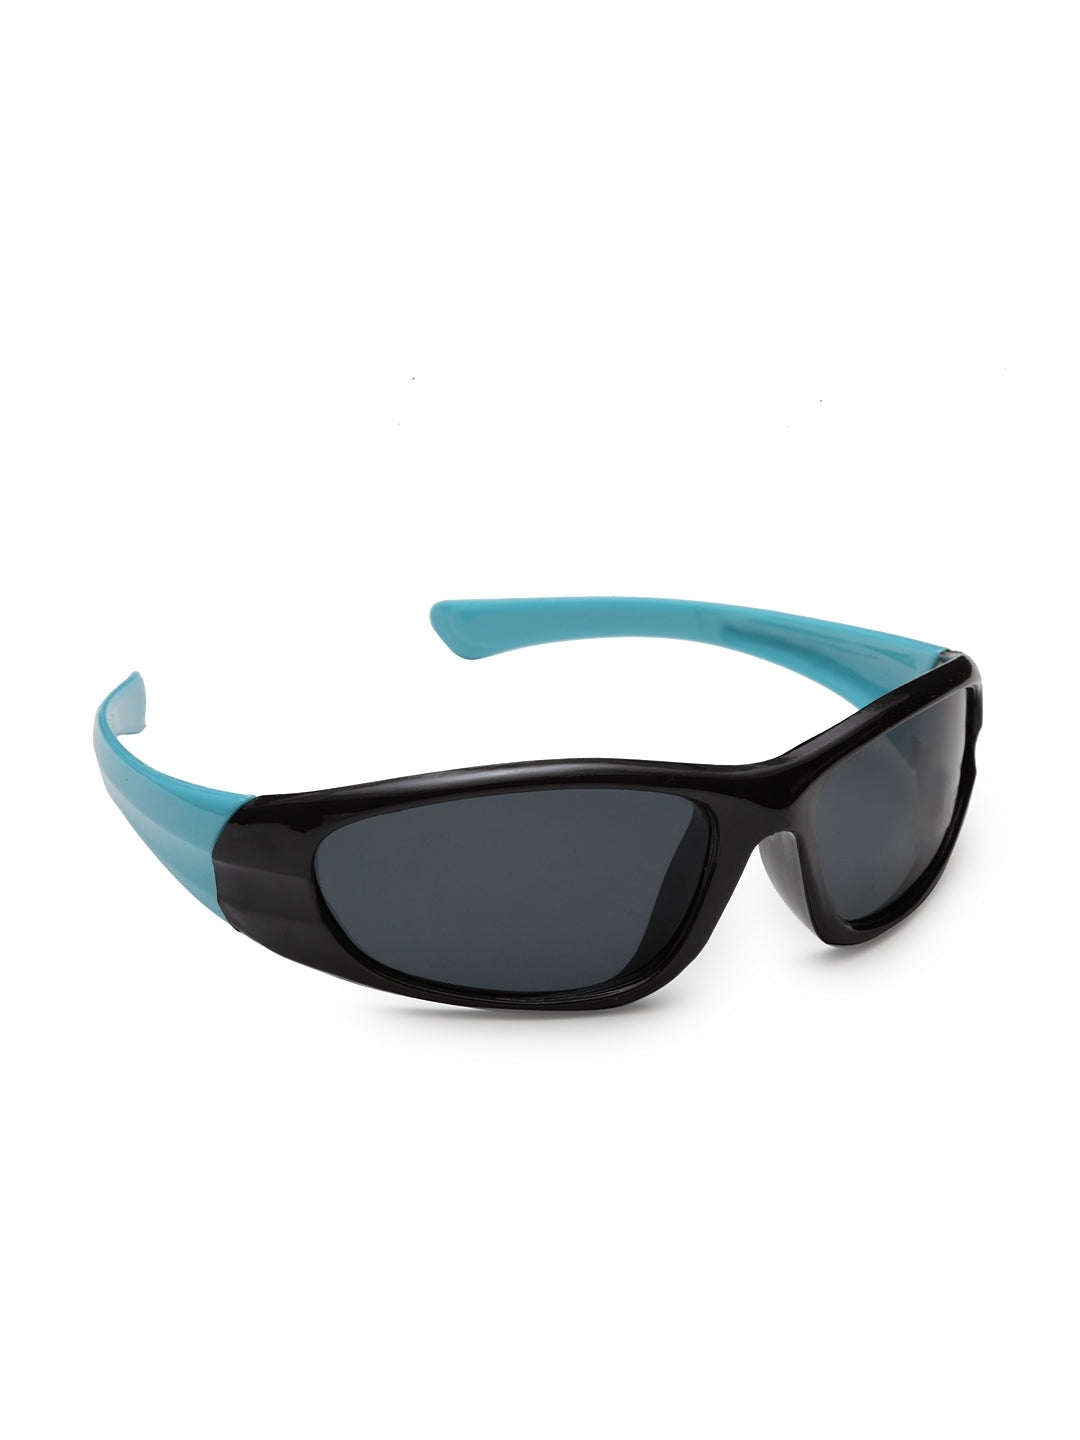 Stol'n Premium Attractive Fashionable UV-Protected Rectangular Shape Sunglasses - Black and Sea Green